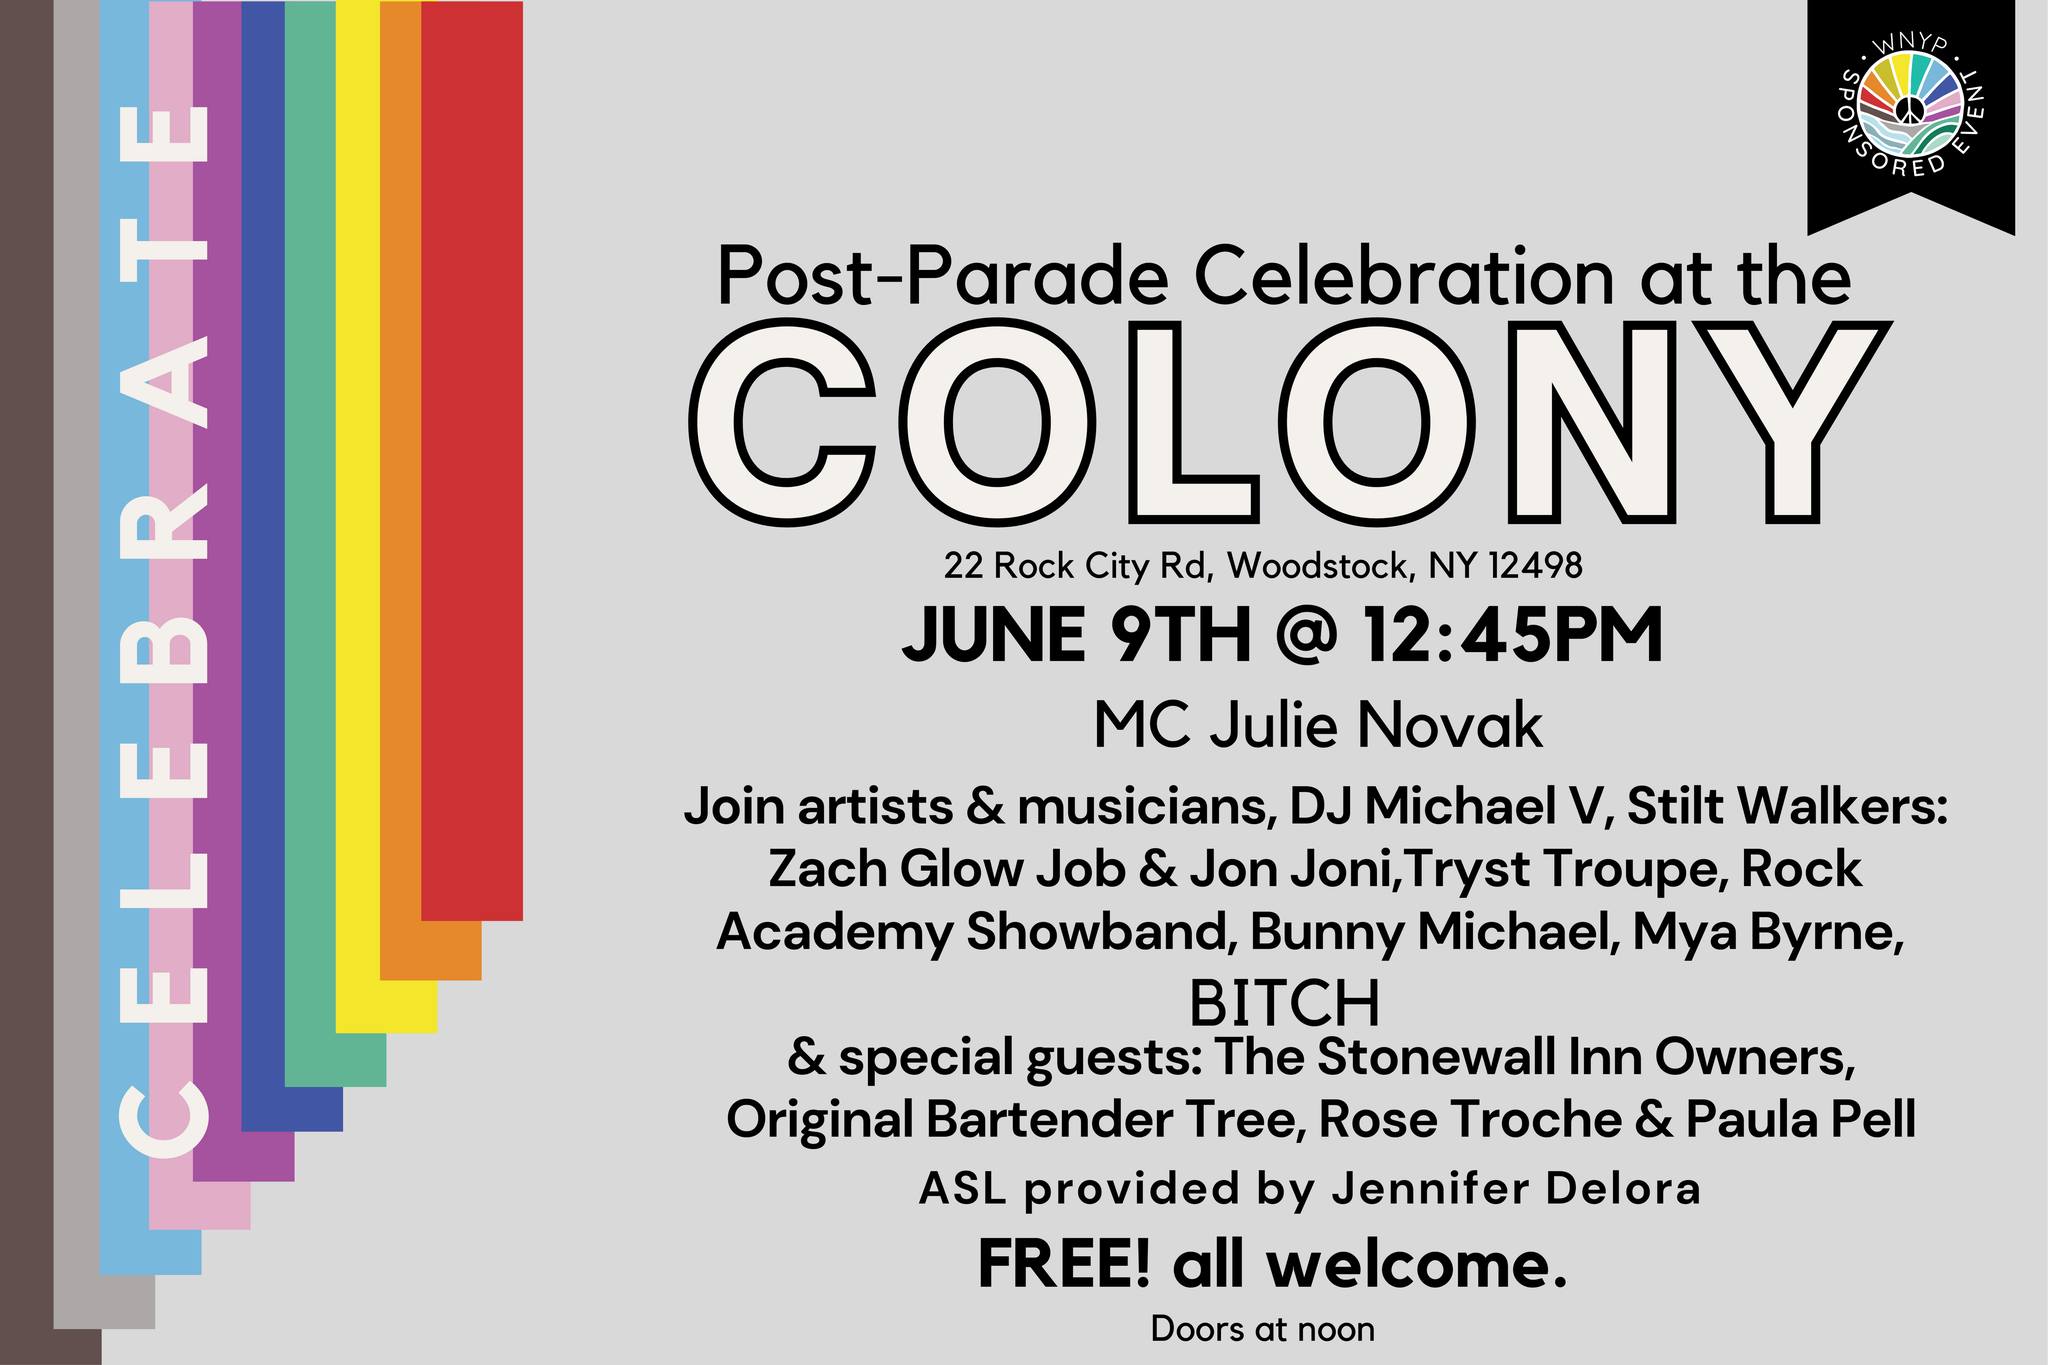 Post Pride Parade Celebration at Colony